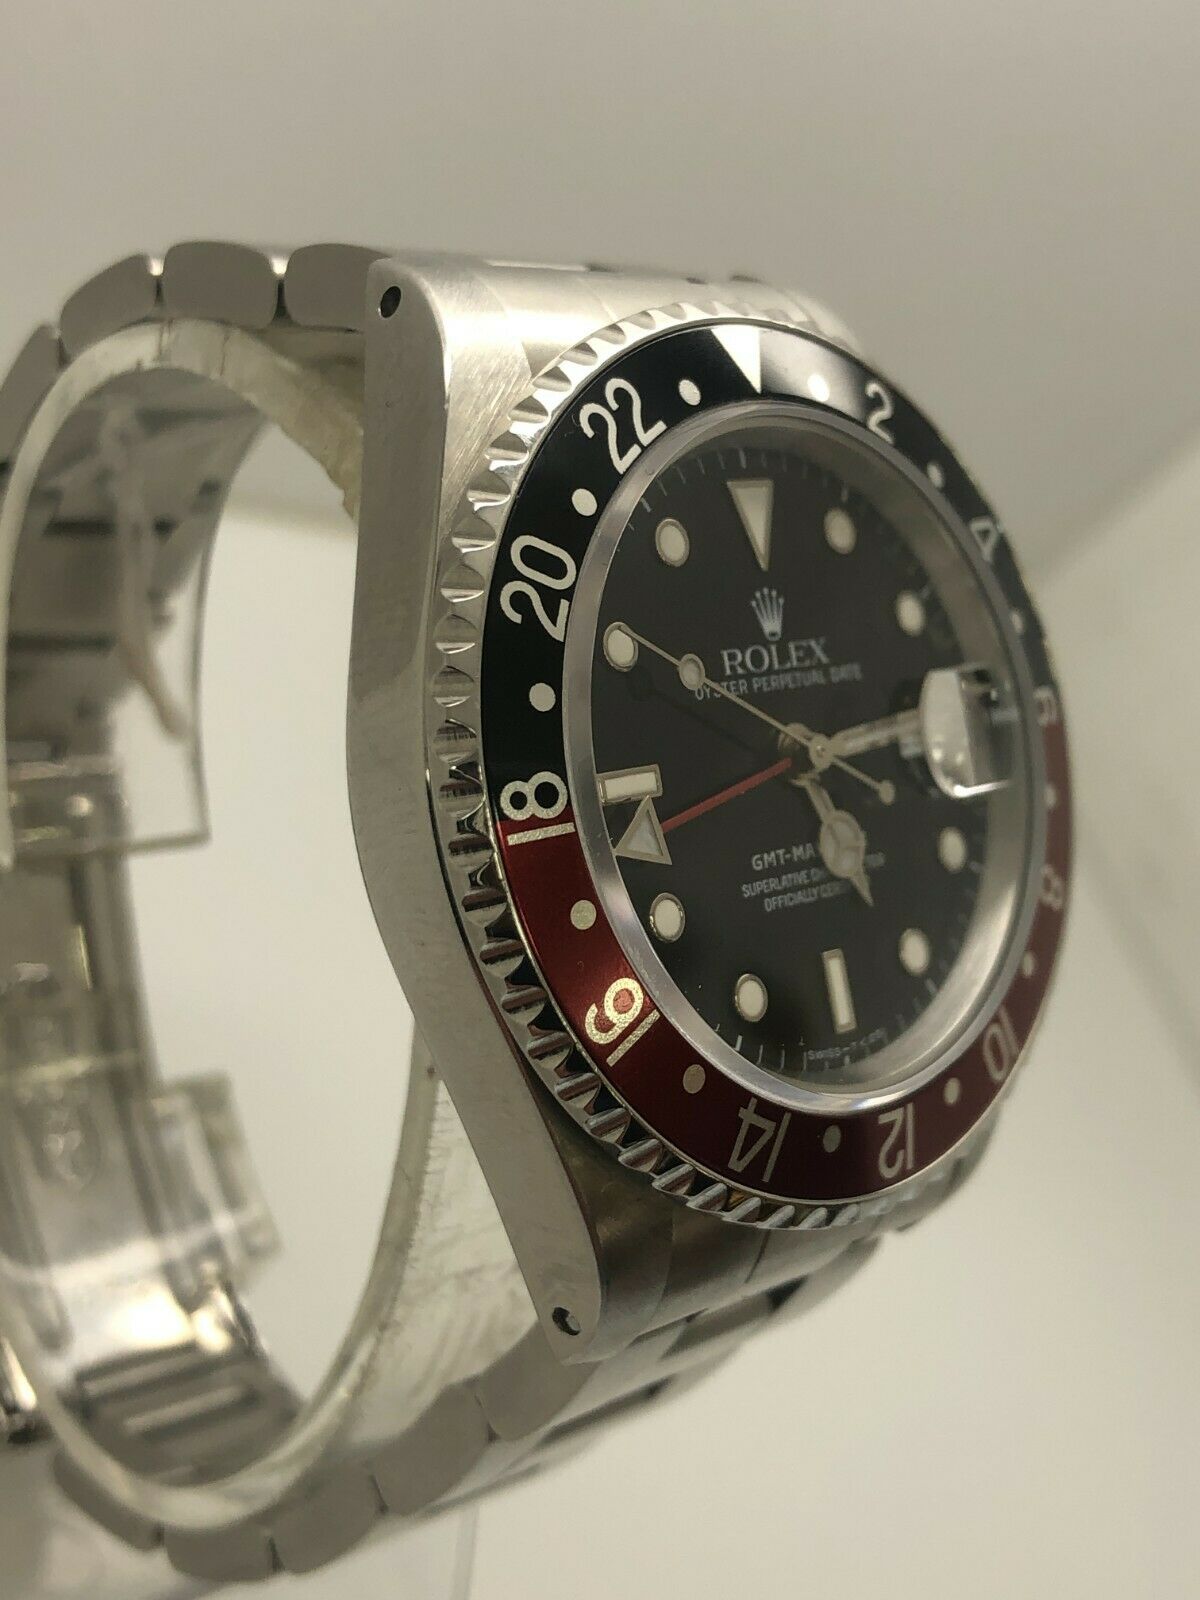 Rolex GMT-Master II Men's Black Watch with Red/Black Bezel - 16710